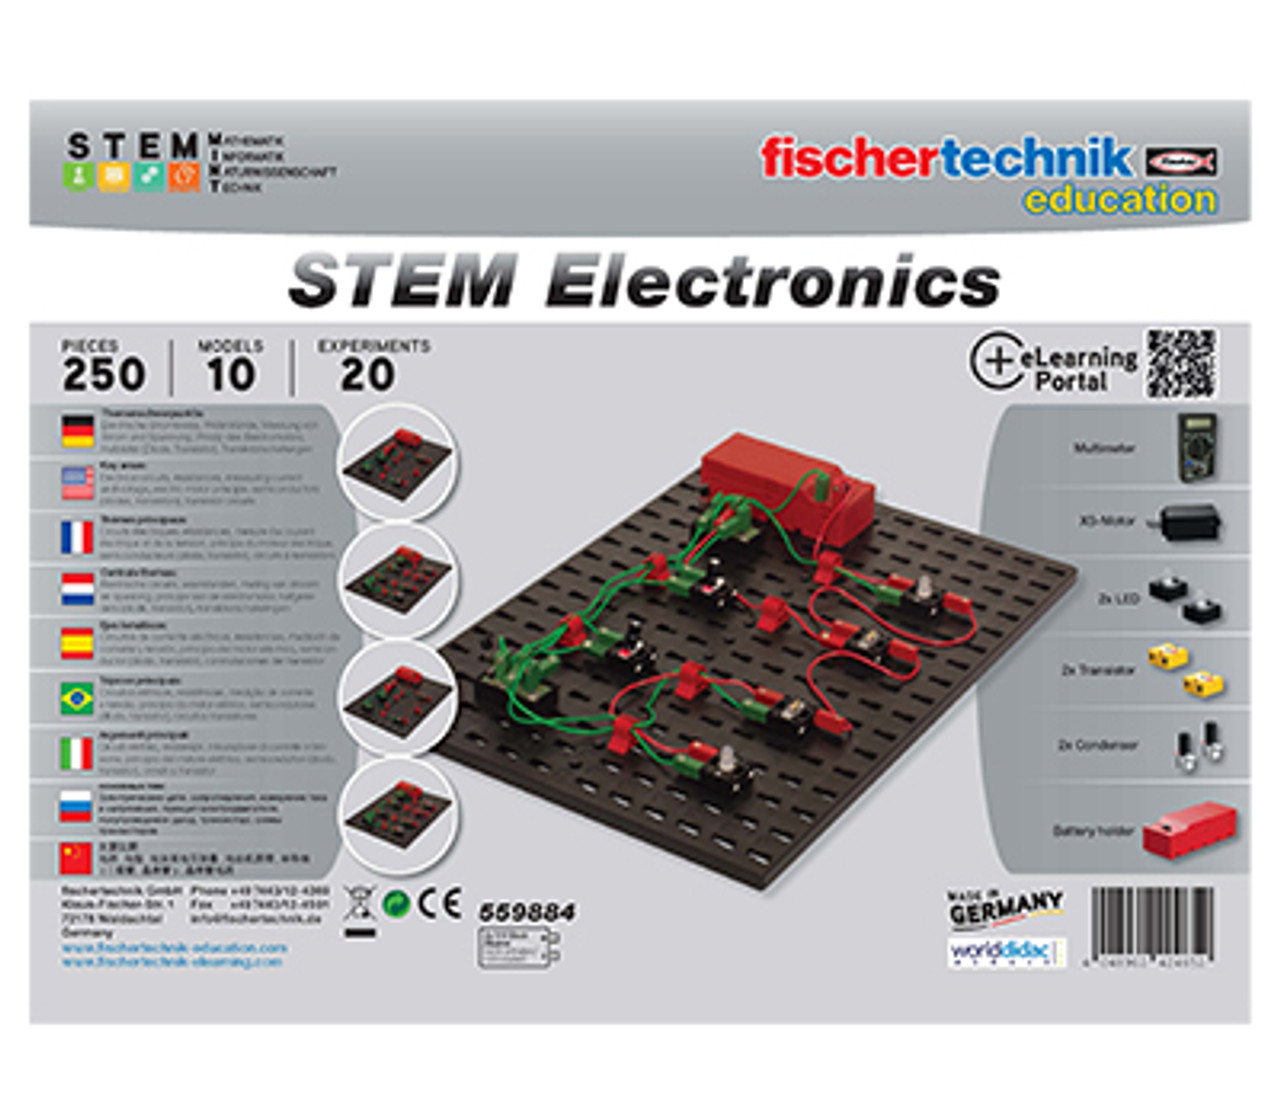 Fischertechnik STEM Electronics Kit - Paxton/Patterson